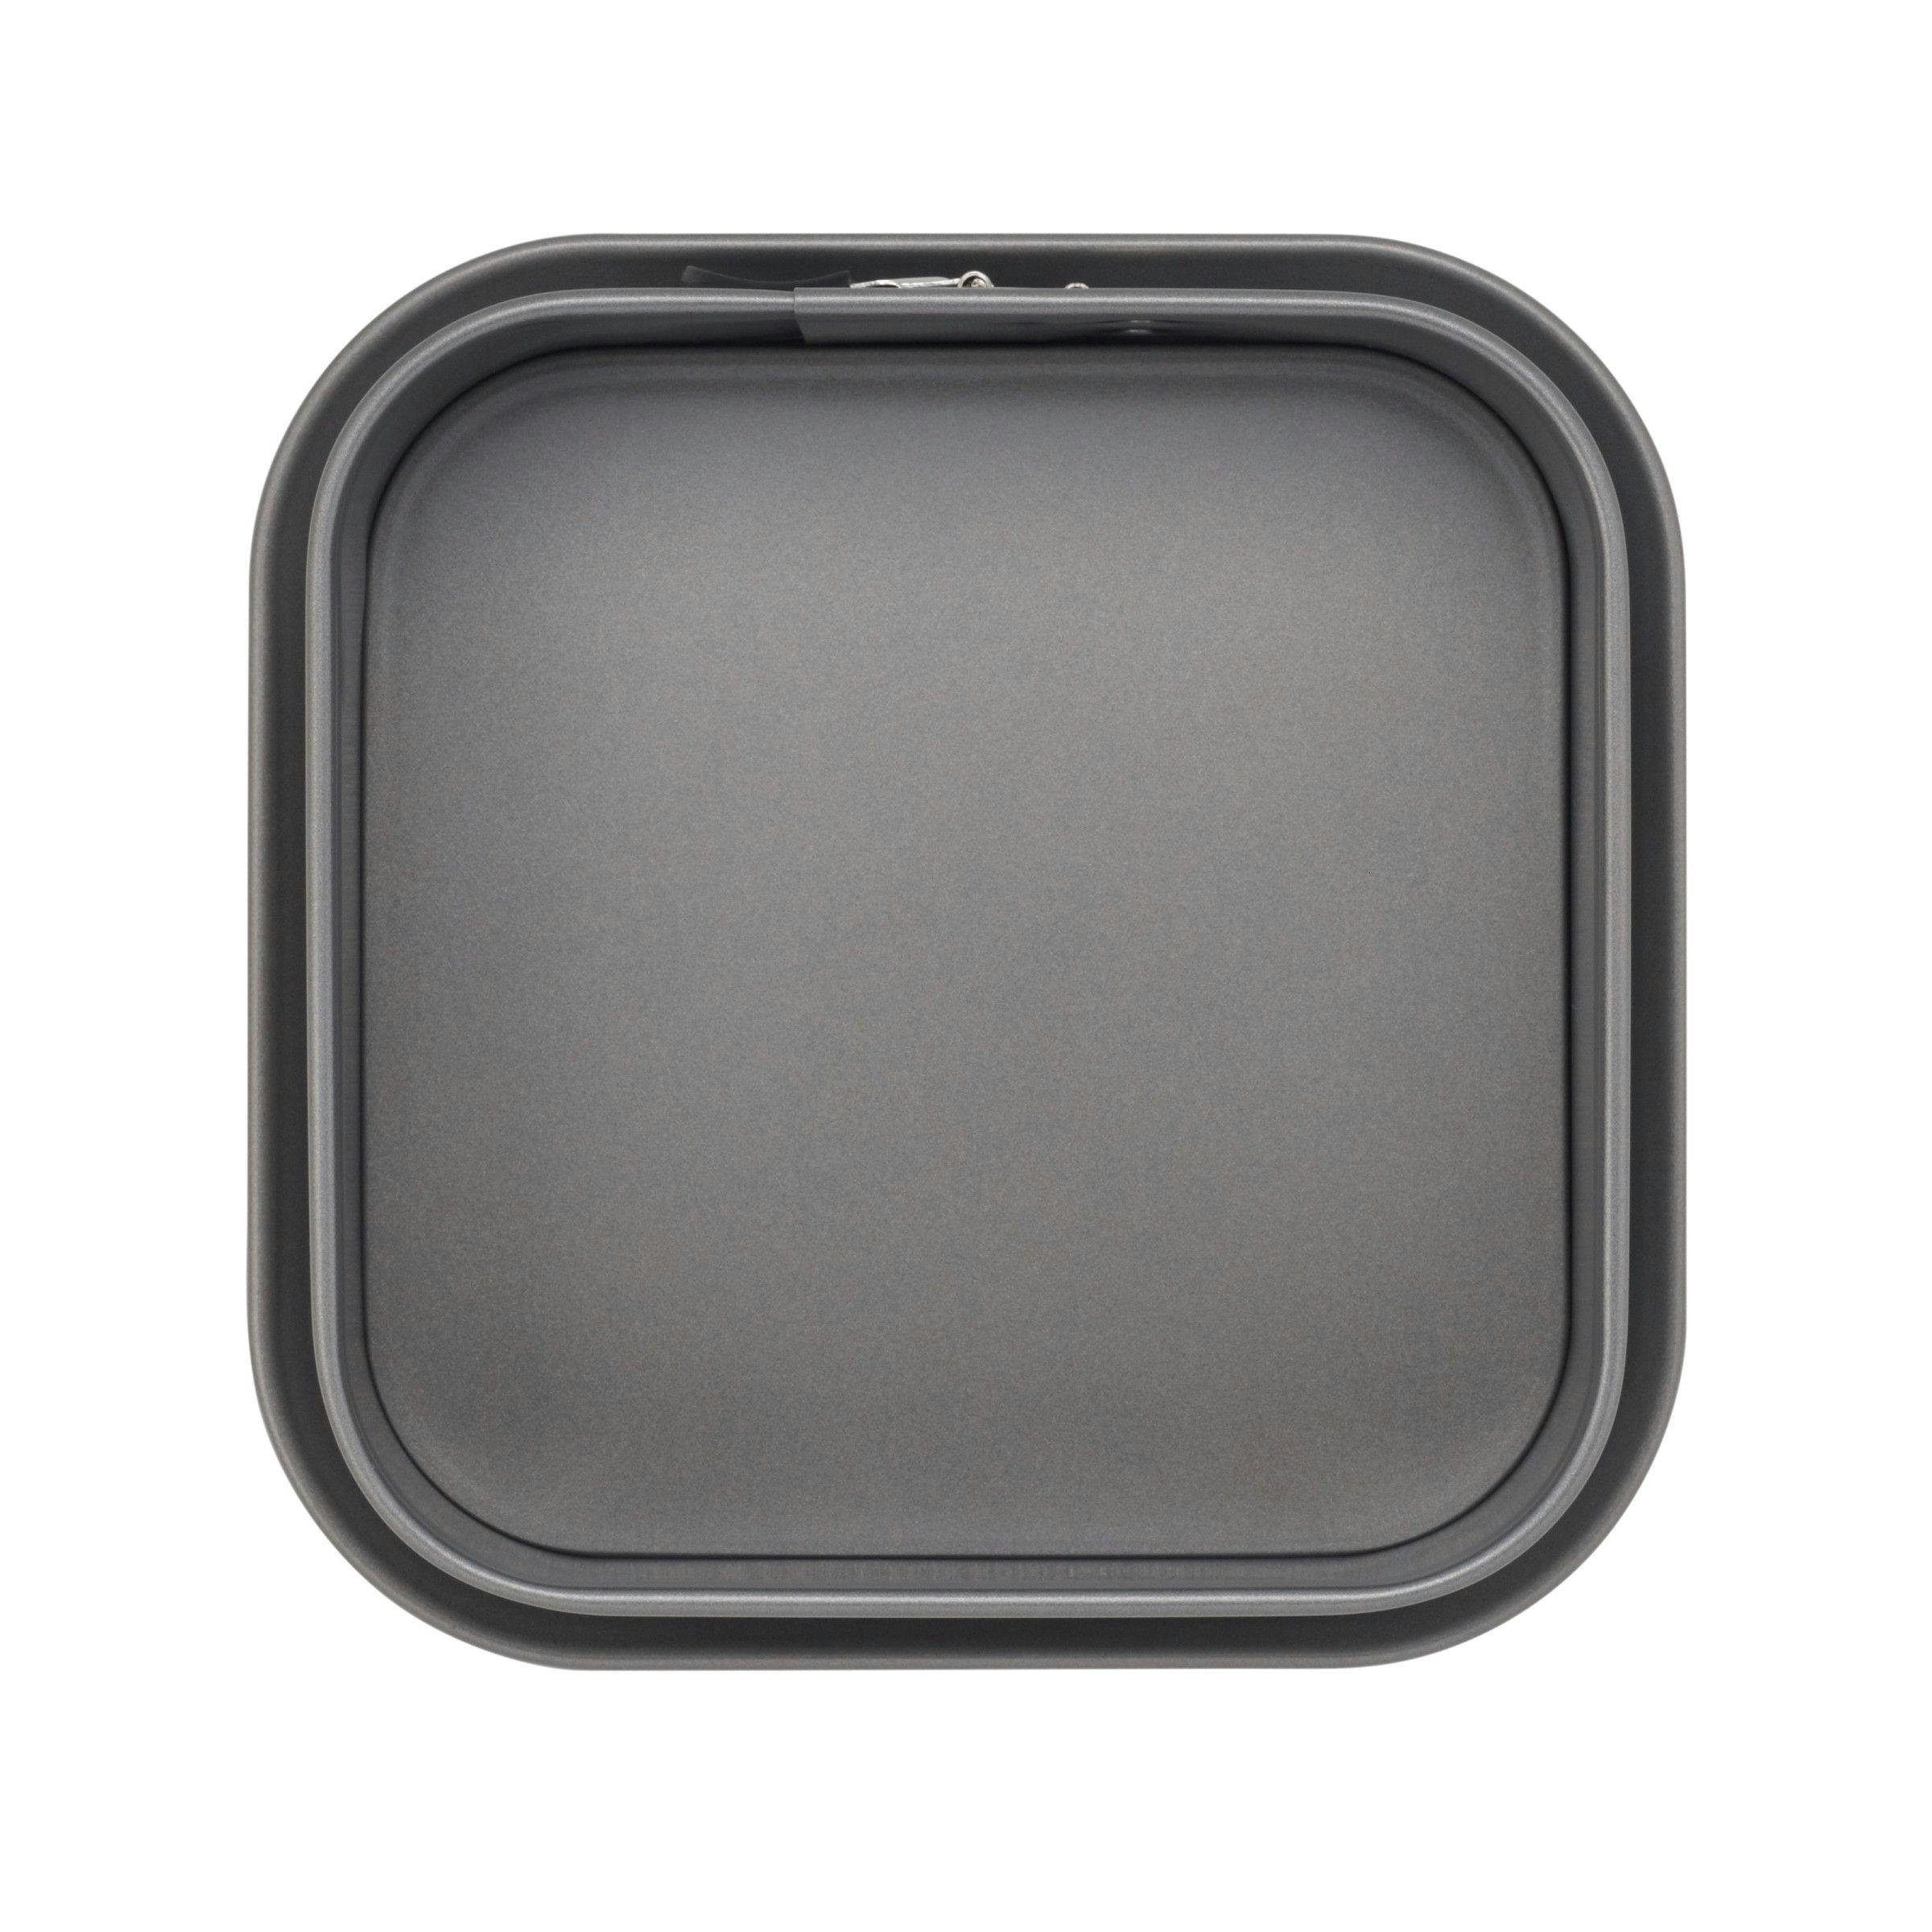 Anolon Advanced Bakeware Nonstick Square Springform Pan, 9-Inch x 9-Inch, Gray